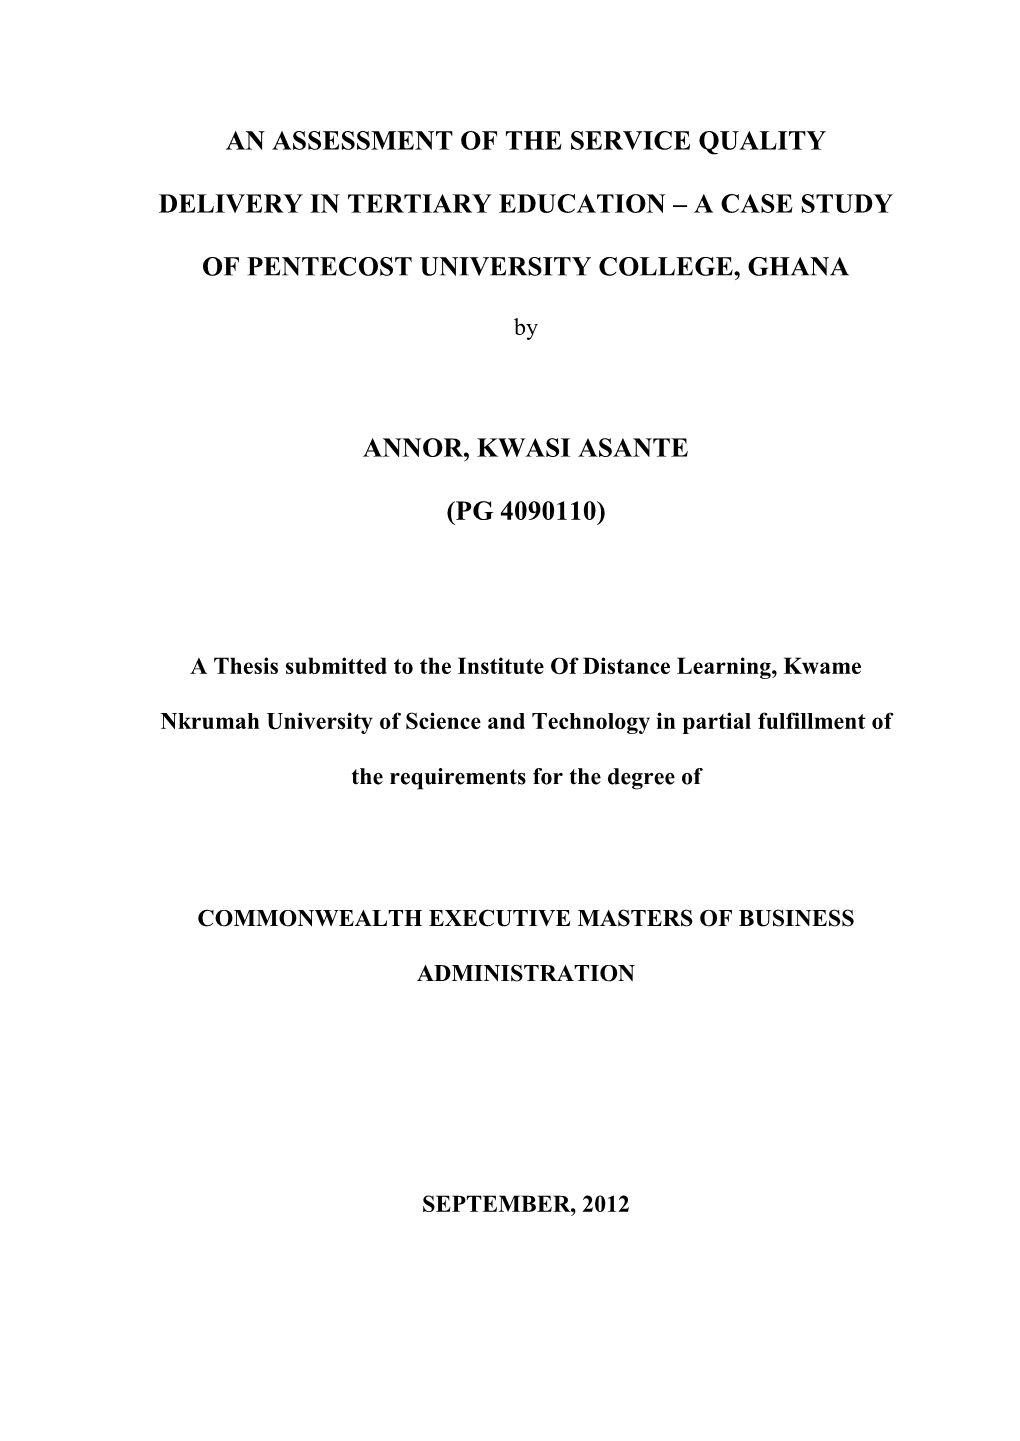 A Case Study of Pentecost University College, Ghana